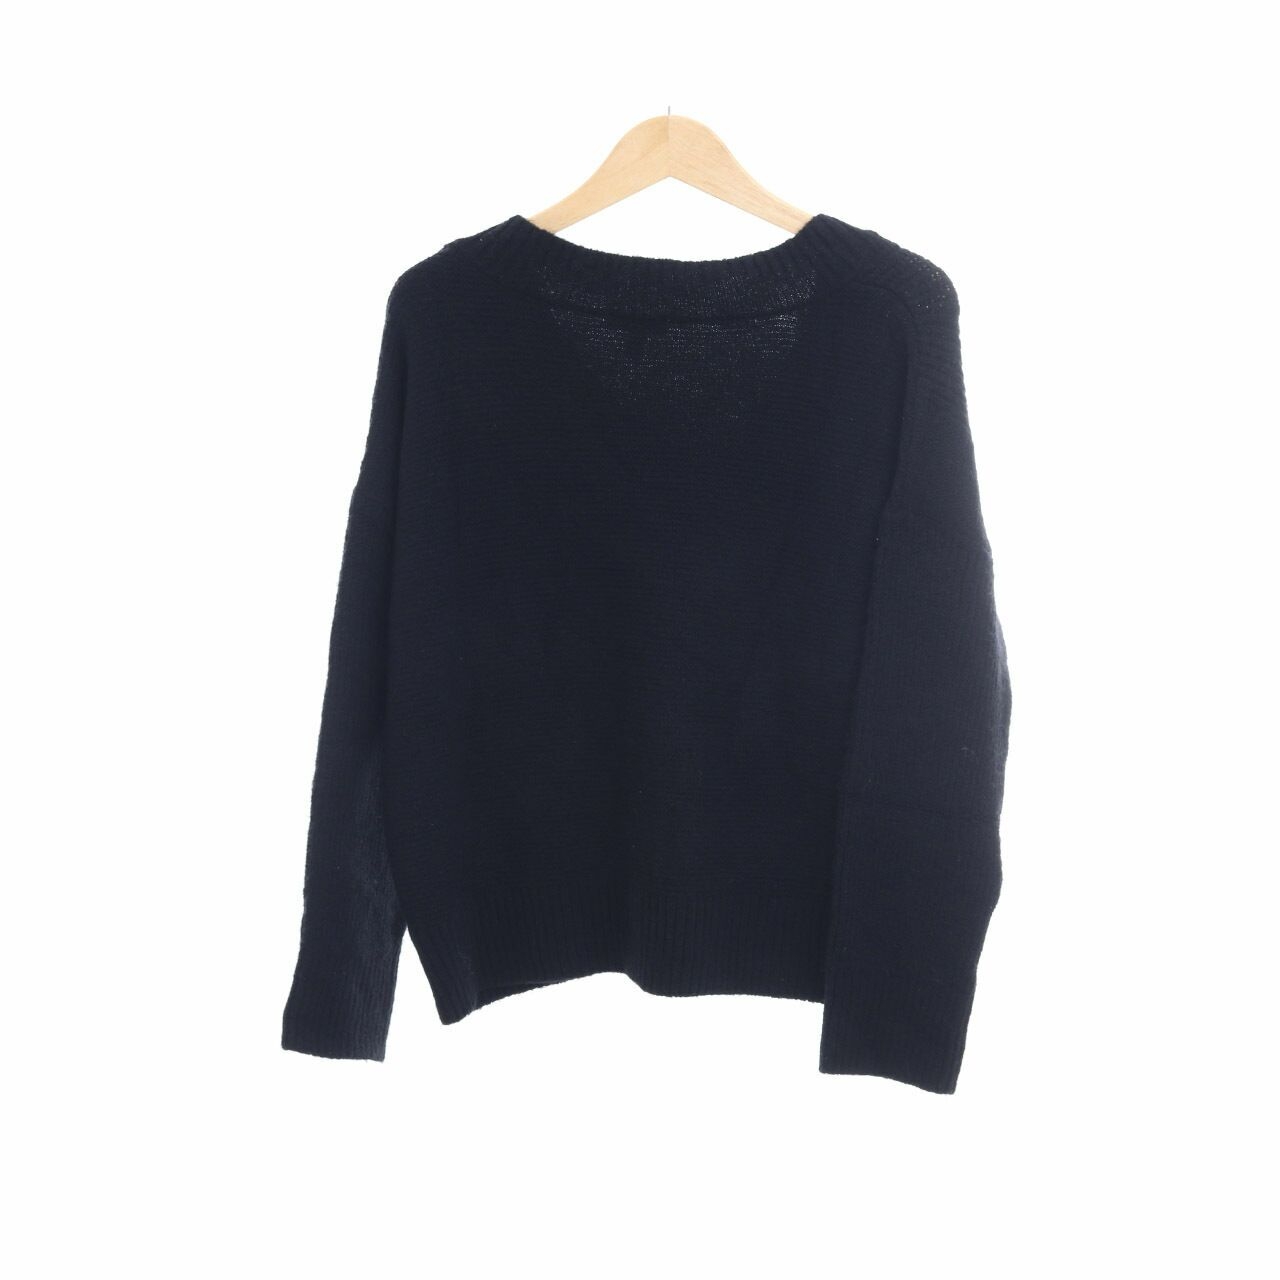 Topshop Black Knit Sweater